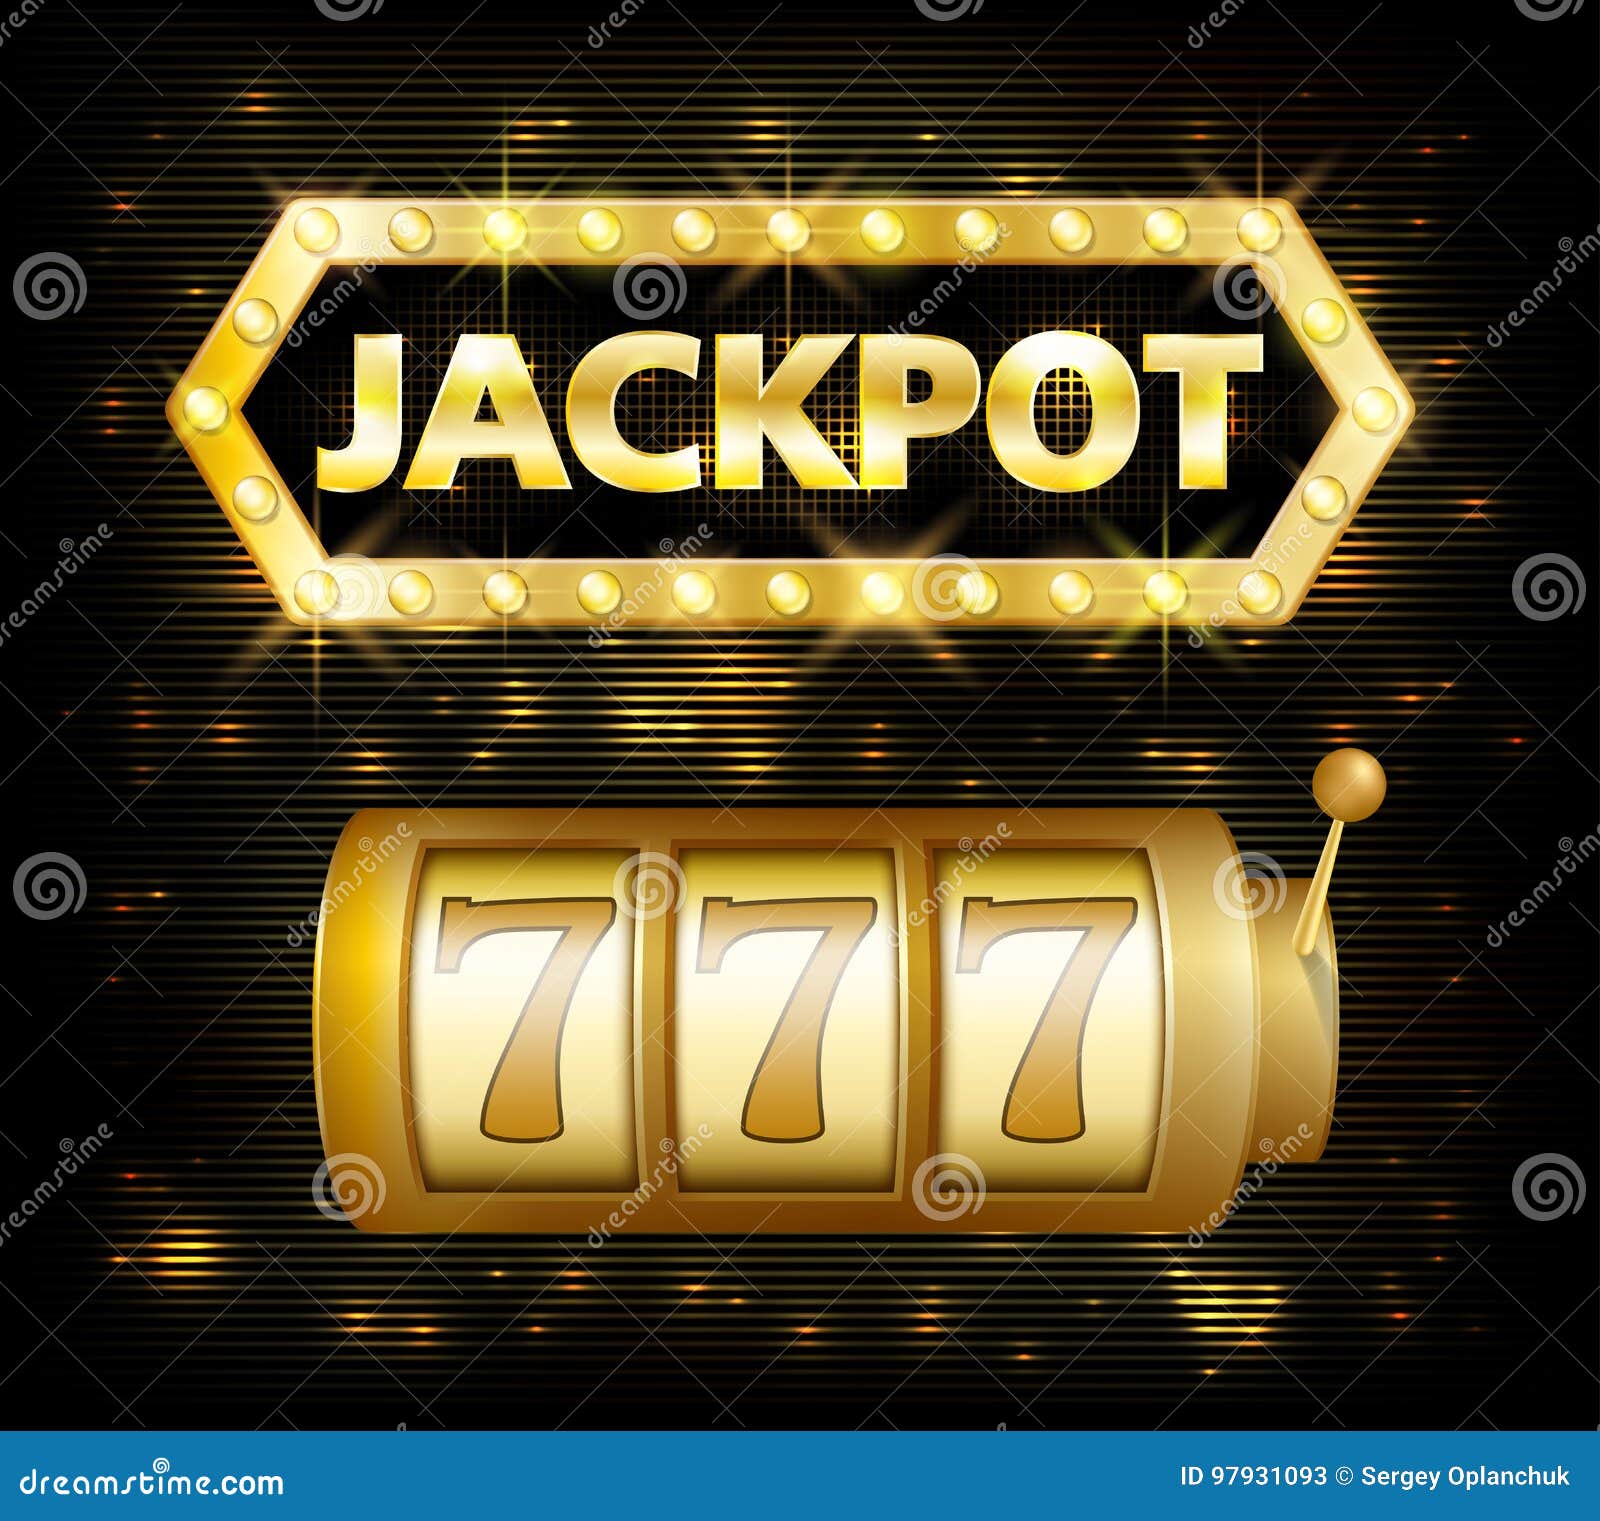 jackpot casino lotto label background sign. casino jackpot 777 gamble winner with text shining  on white